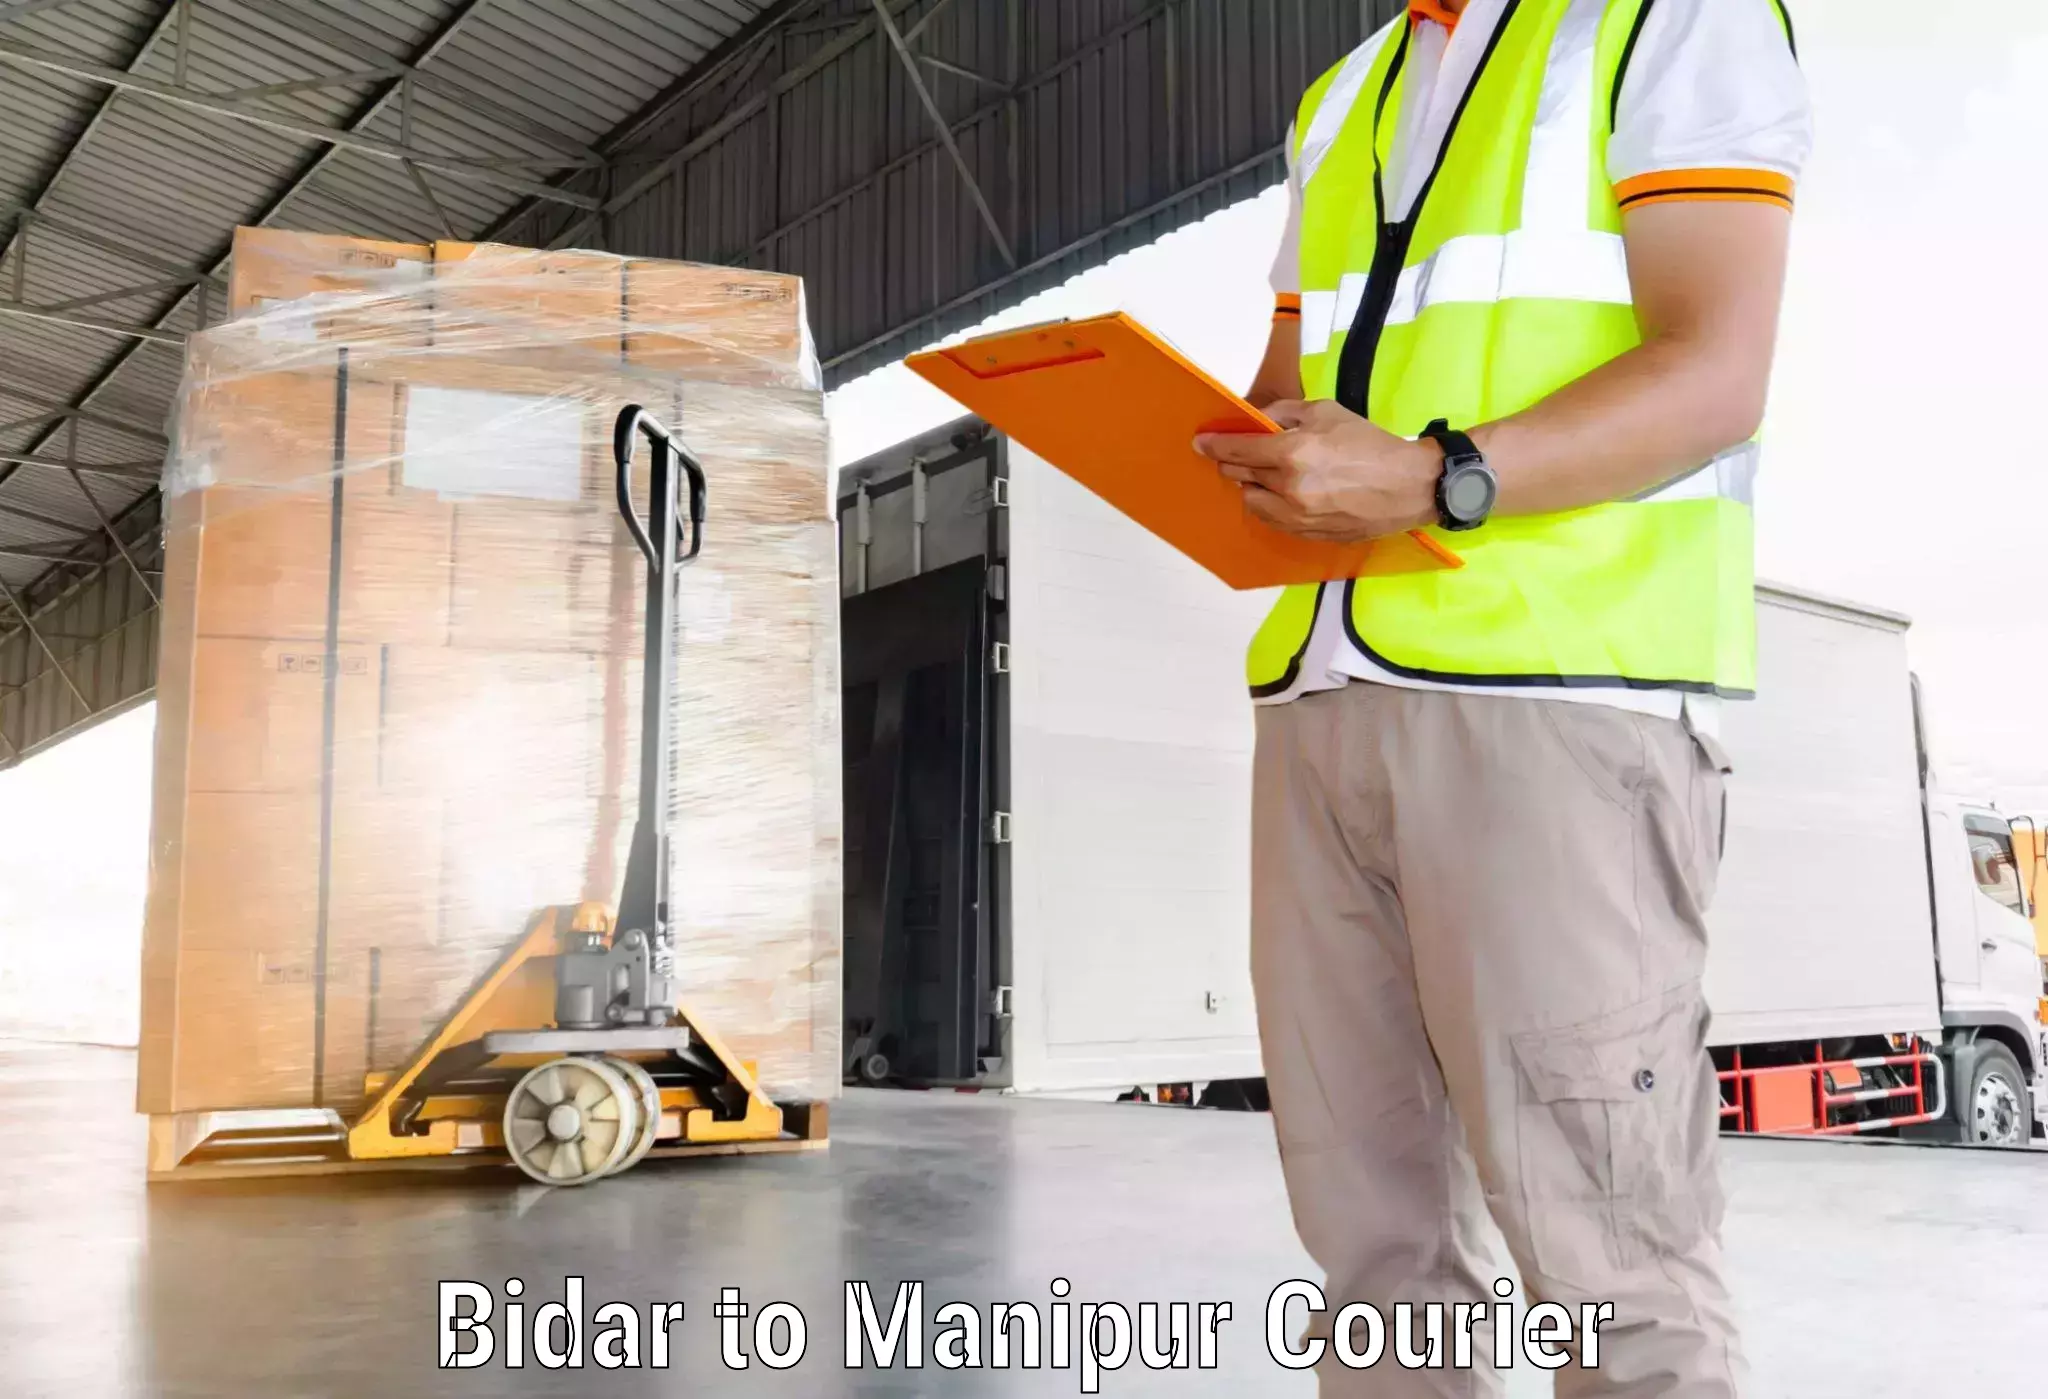 Logistics service provider Bidar to Manipur